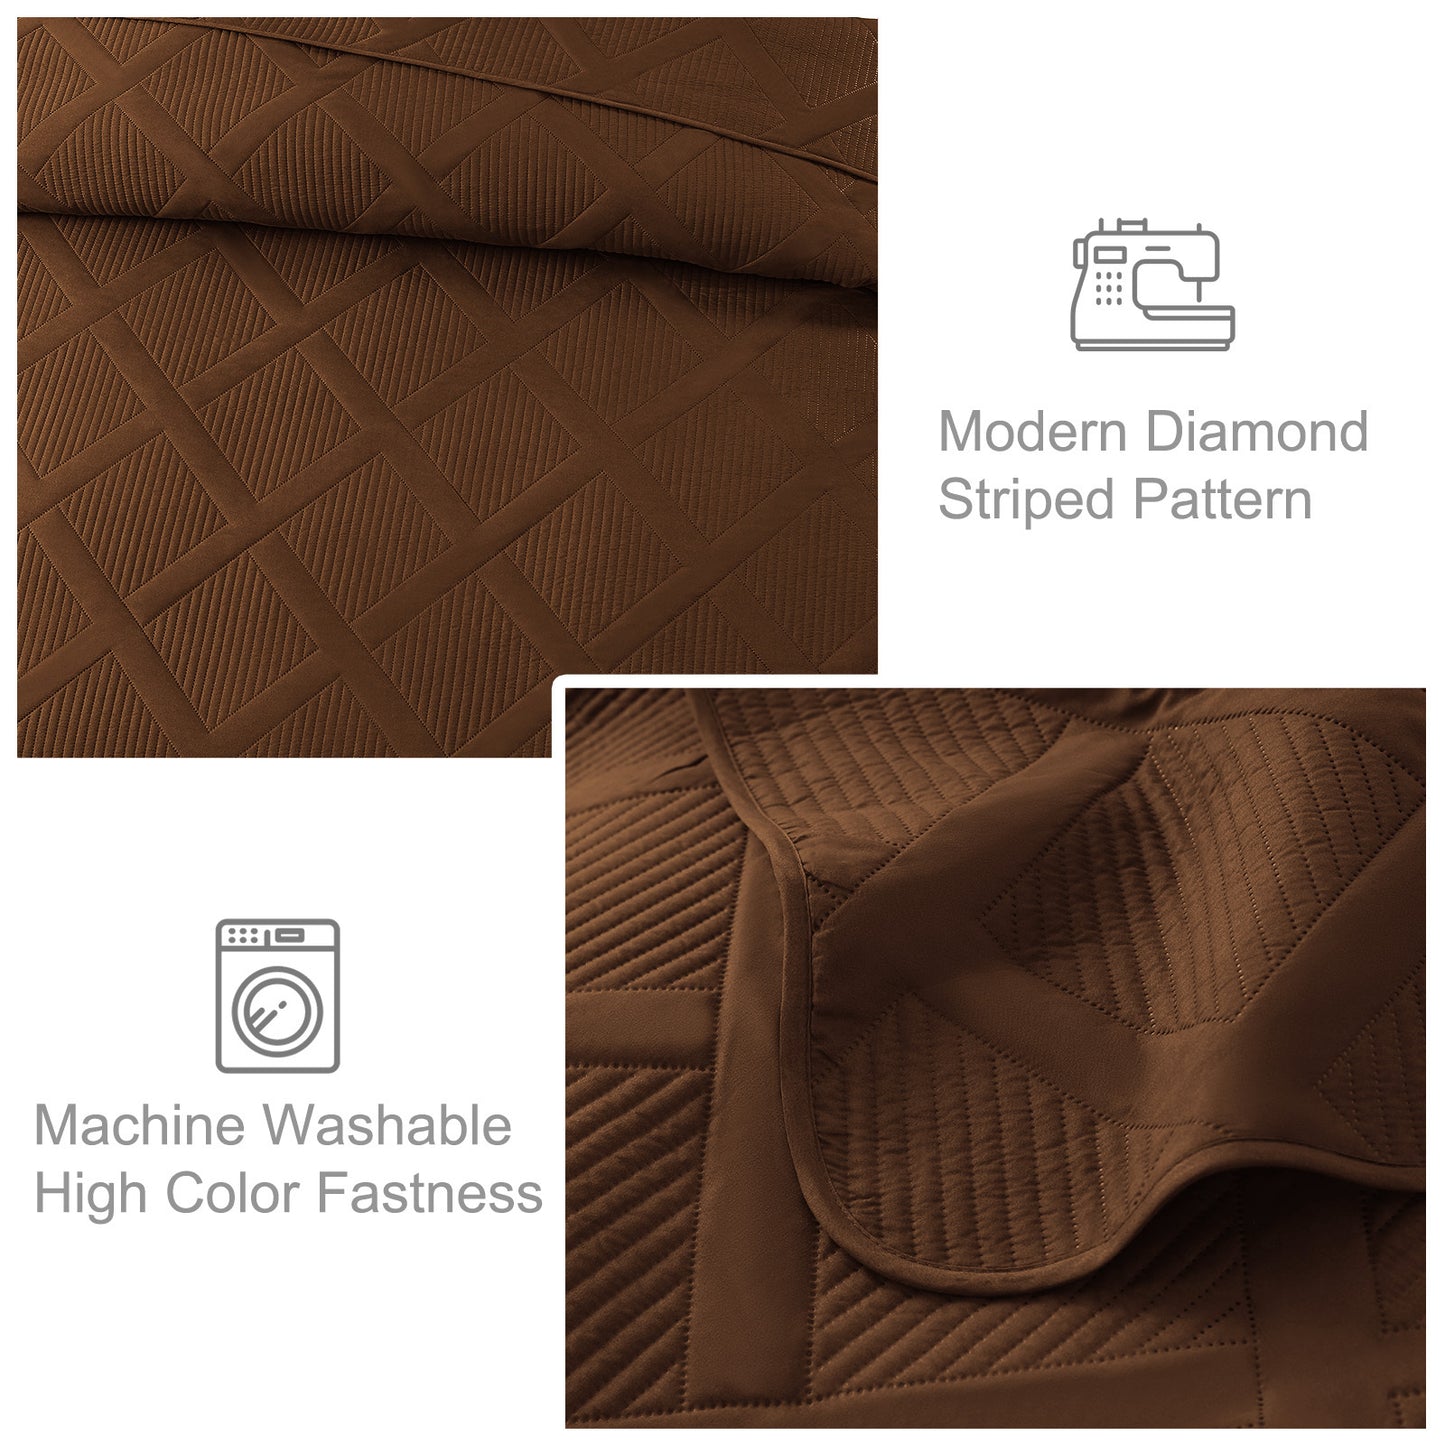 Exclusivo Mezcla 3 Pieces Ultrasonic Full Queen Quilt Set, Lightweight Bedspreads Modern Striped Coverlet Set, Brown